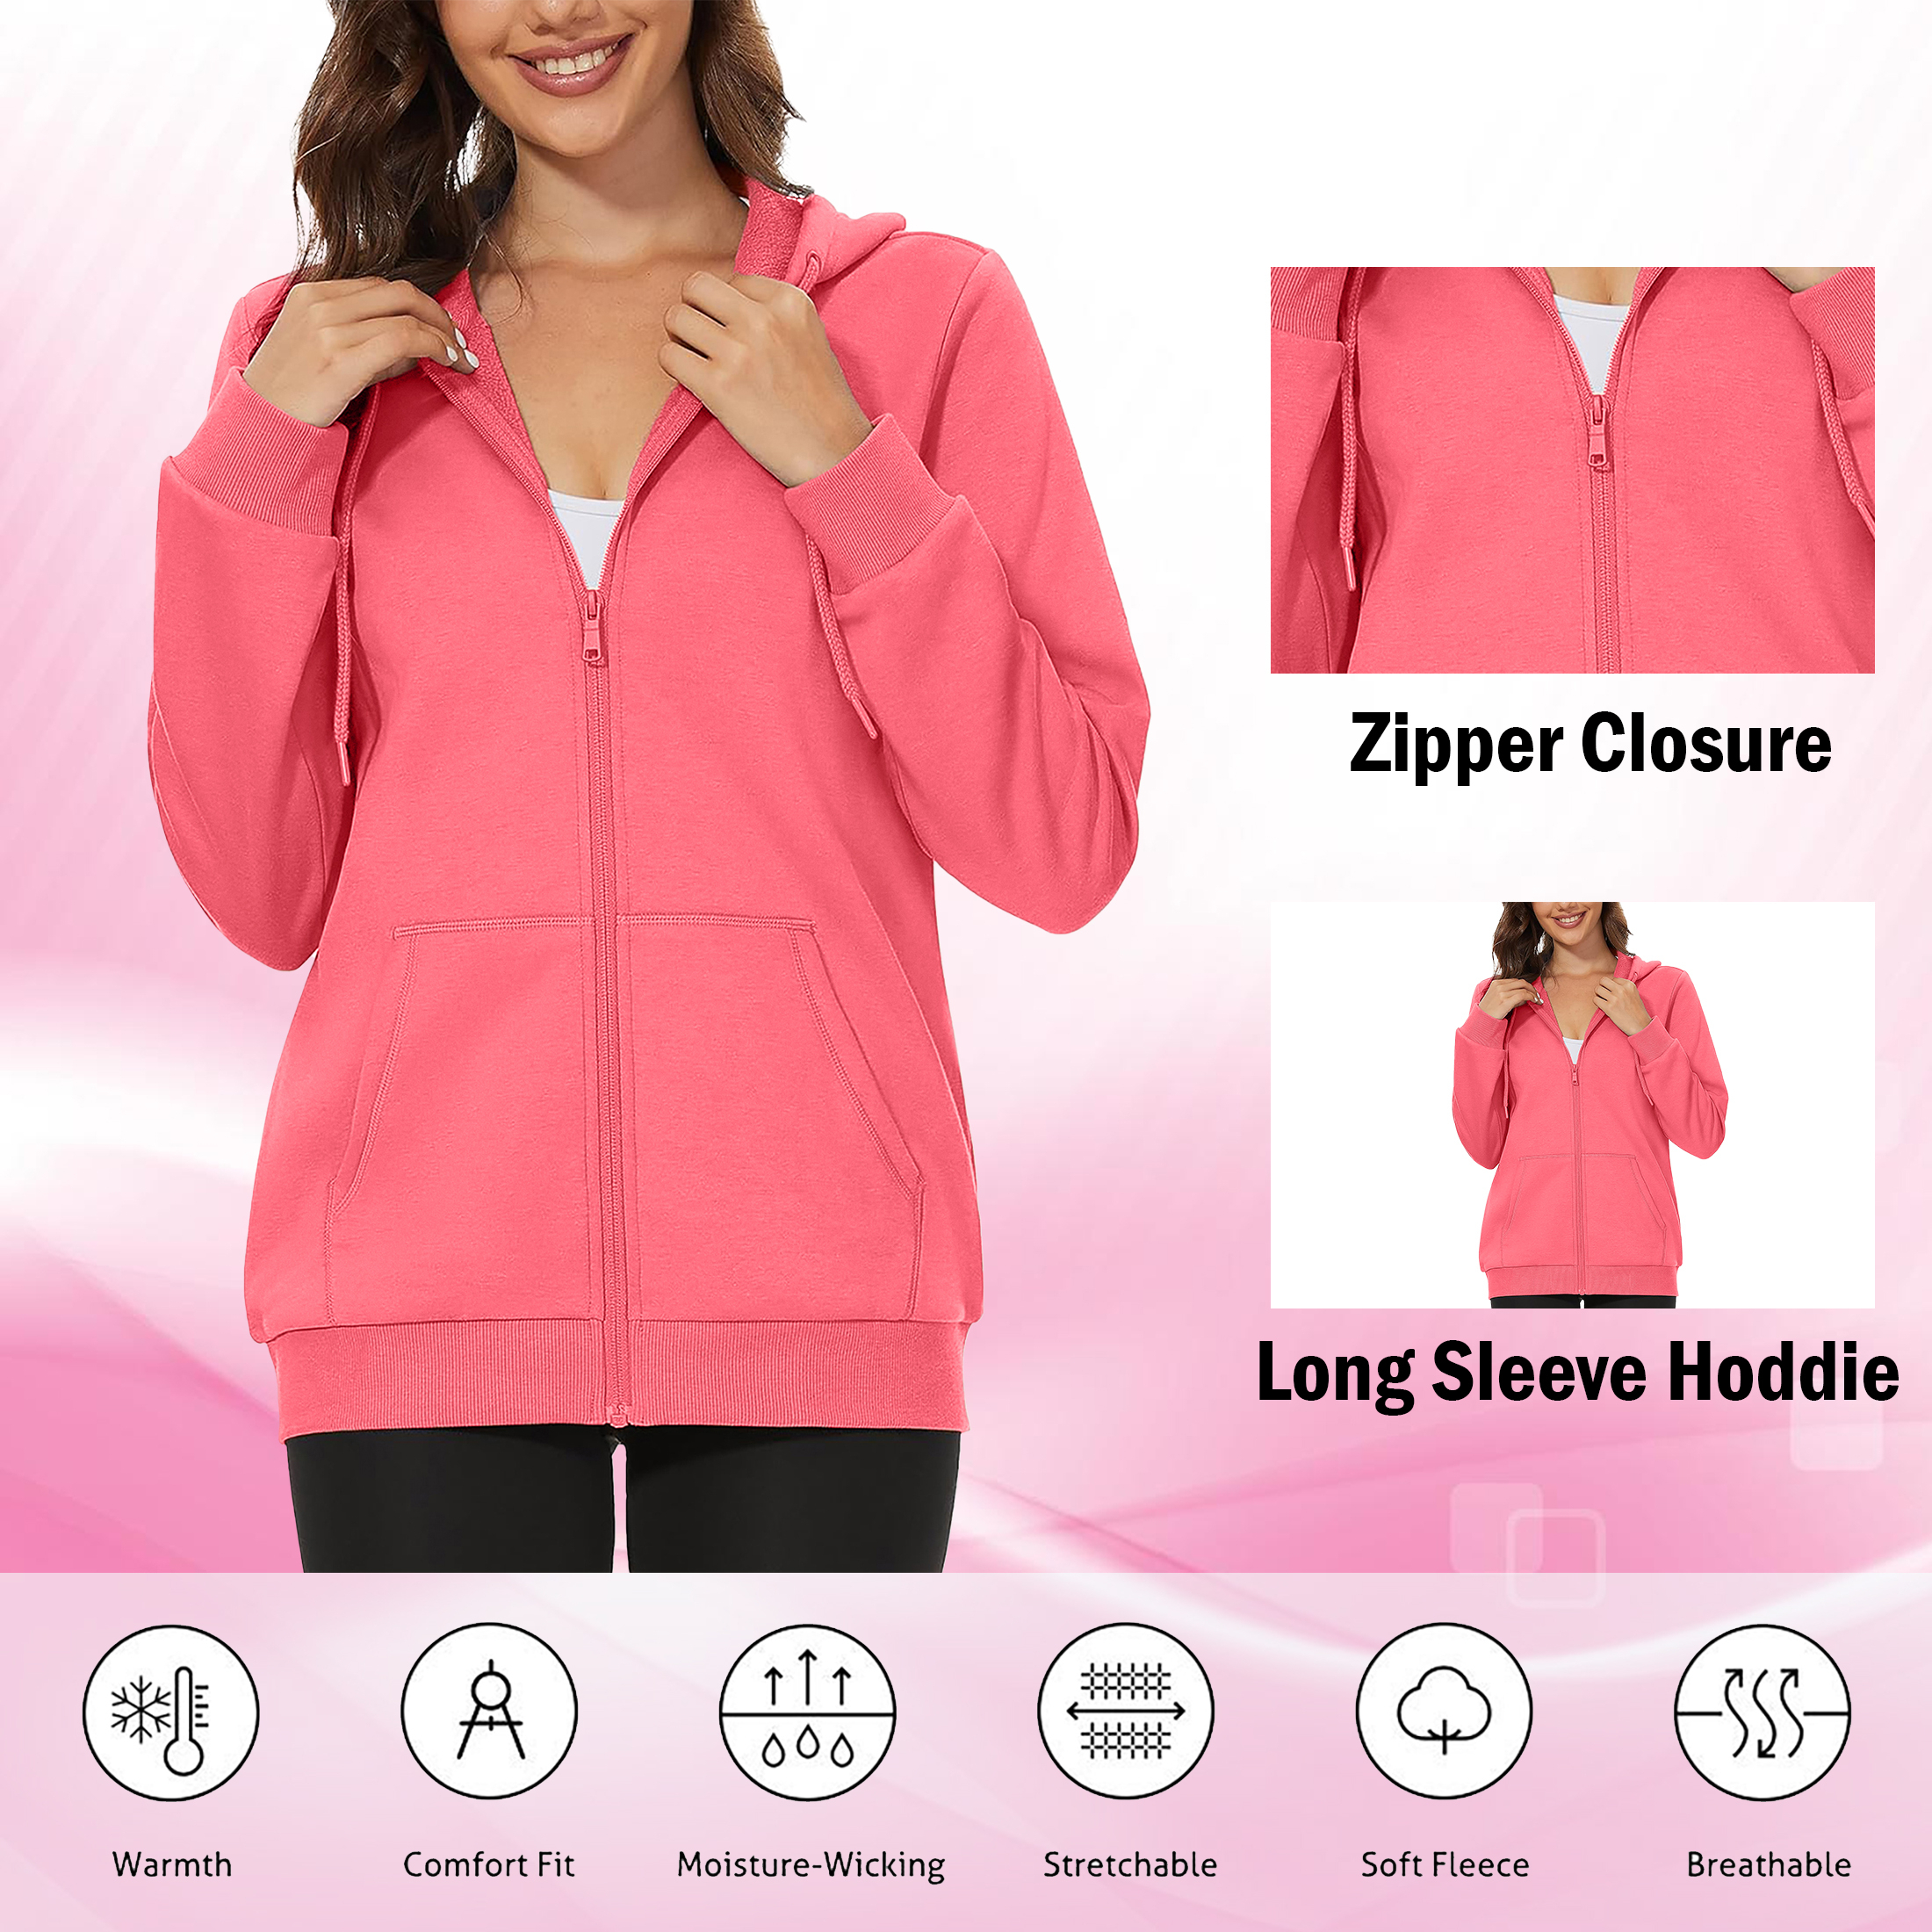 Multi-Pack: Women's Winter Warm Soft Blend Fleece Lined Full Zip Up Hoodie - 1-pack, X-large